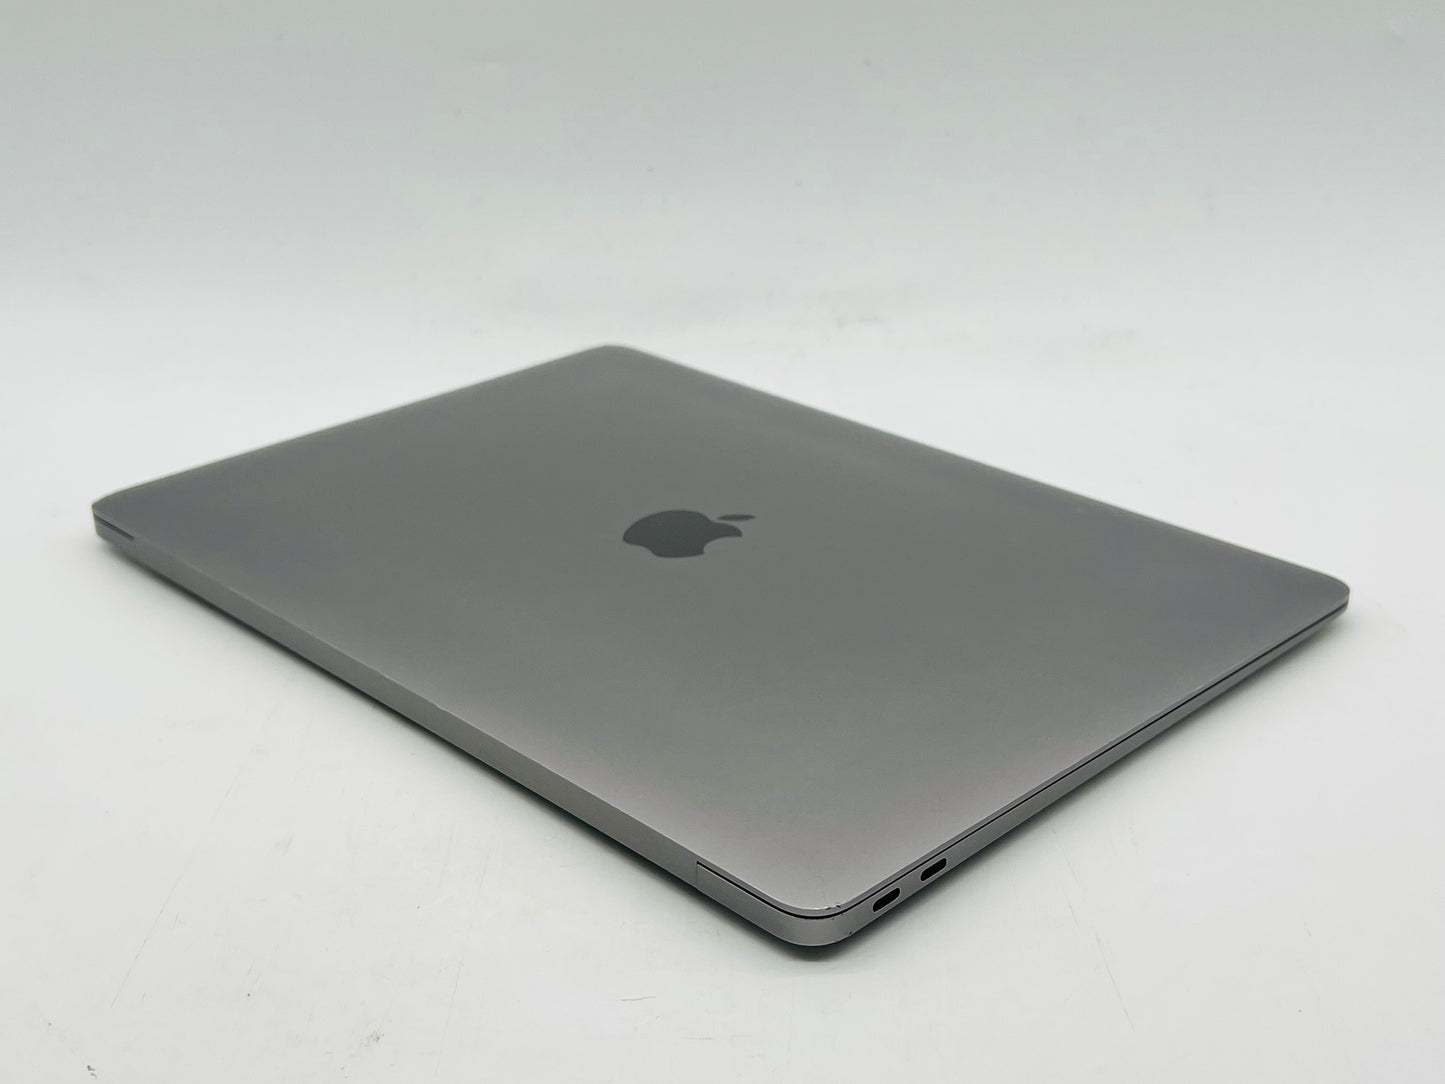 Apple 2018 MacBook Air 13 in 1.6GHz Dual-Core i5 16GB RAM 128GB SSD IUG 617